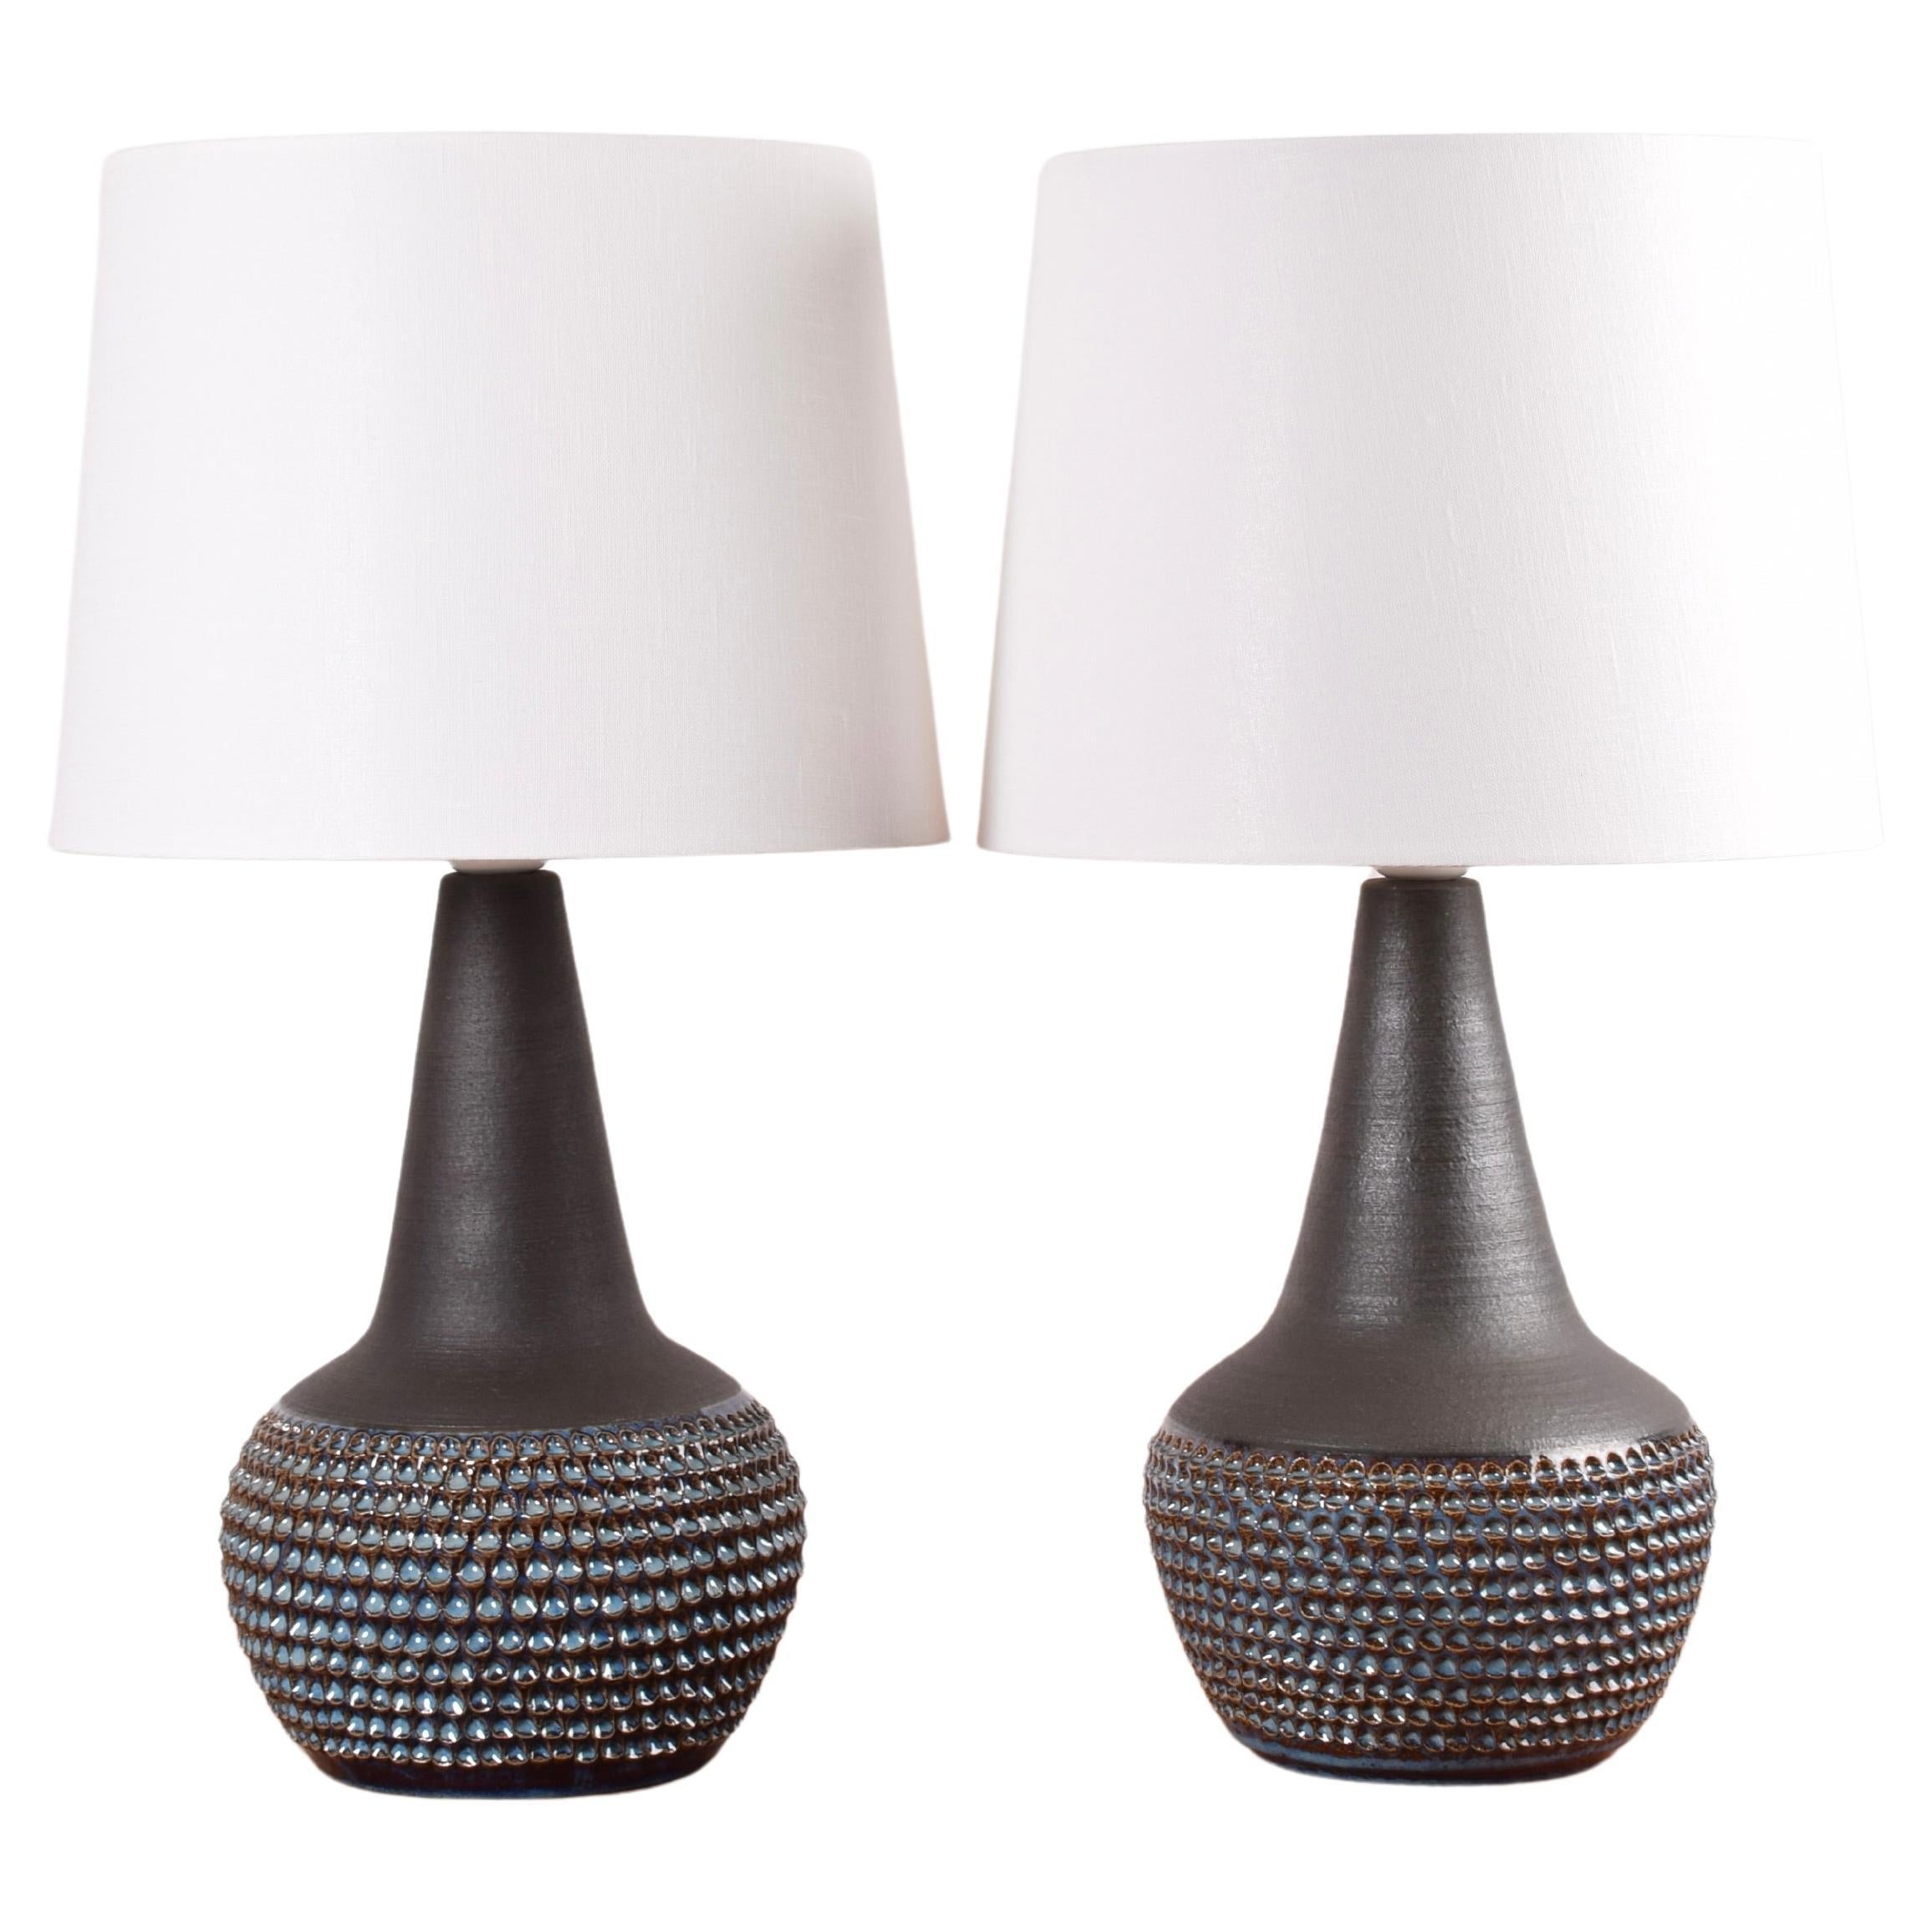 Pair of Danish Modern Søholm Blue Ceramic Table Lamps by Einar Johansen, 1960s